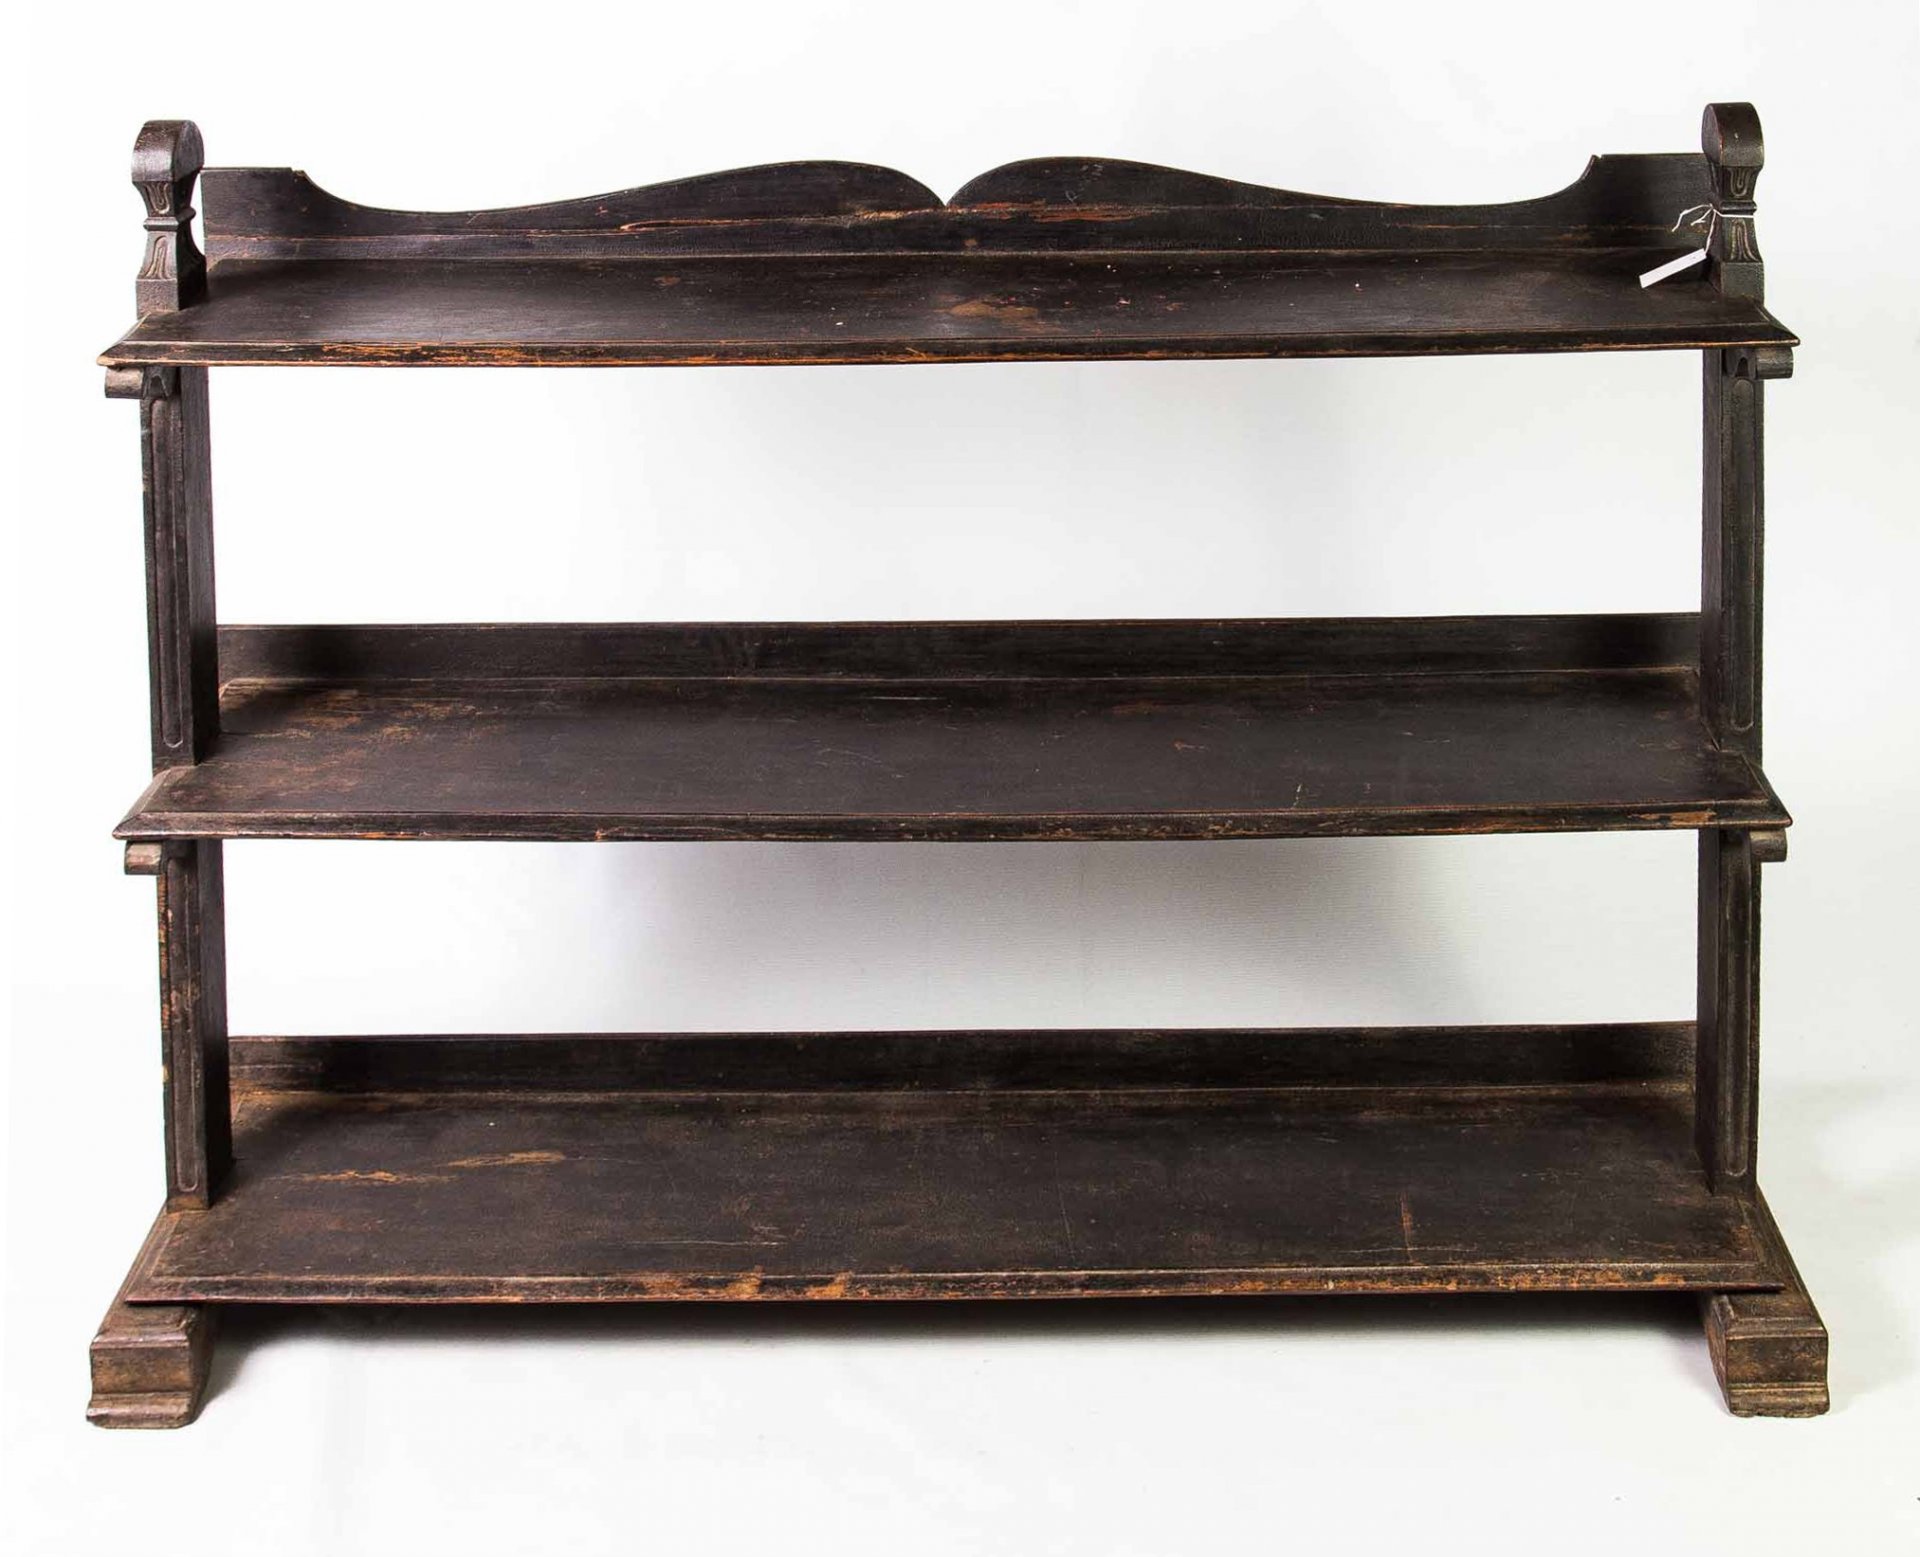 LBK10 Antique Wooden Rack